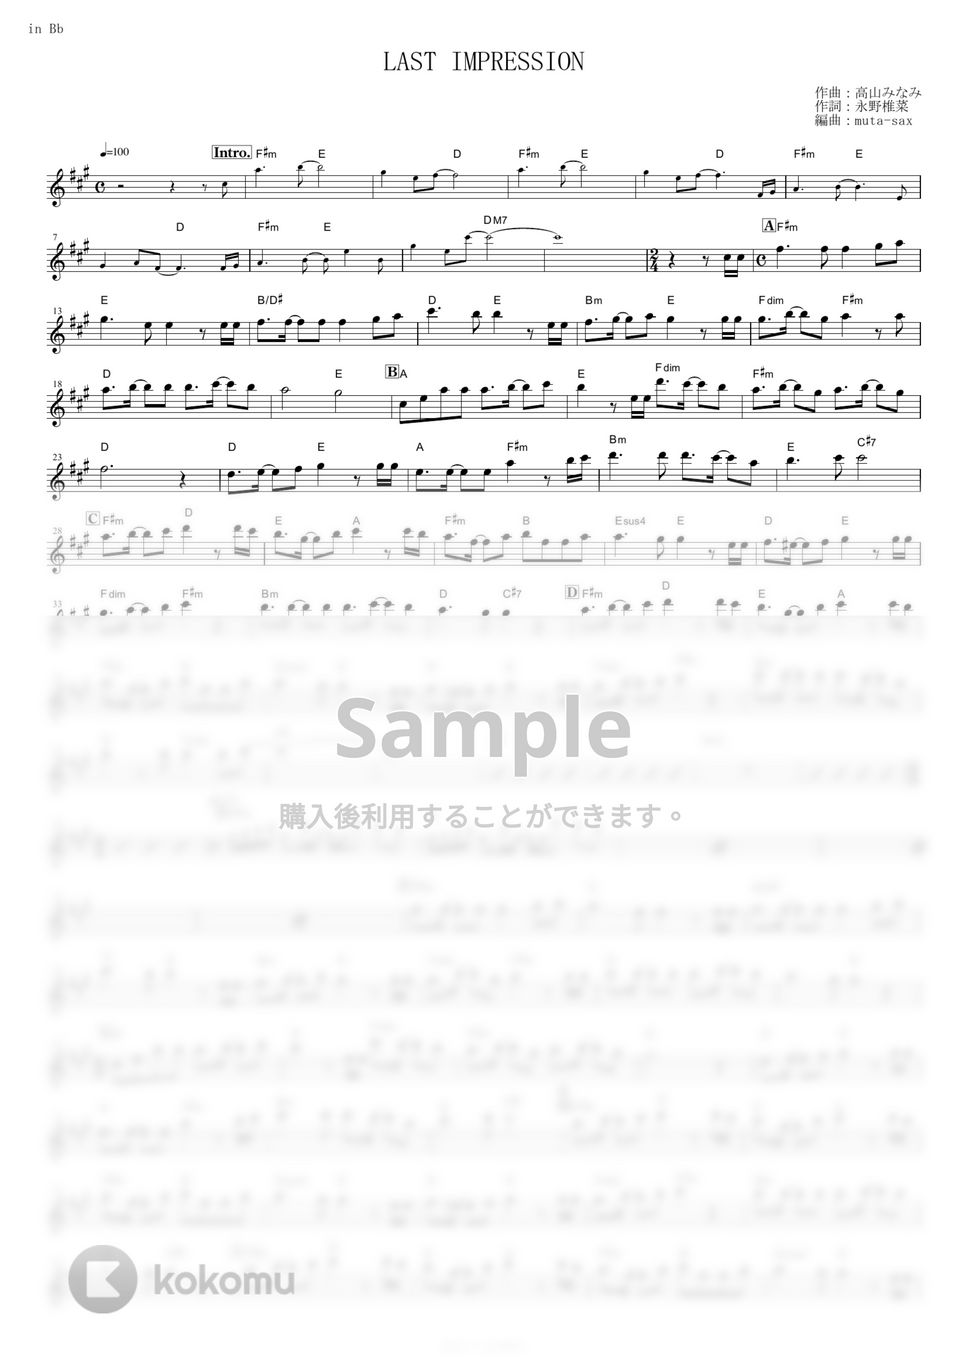 TWO-MIX - LAST IMPRESSION (『新機動戦記ガンダムW Endless Waltz 特別編』 / in Bb) by muta-sax